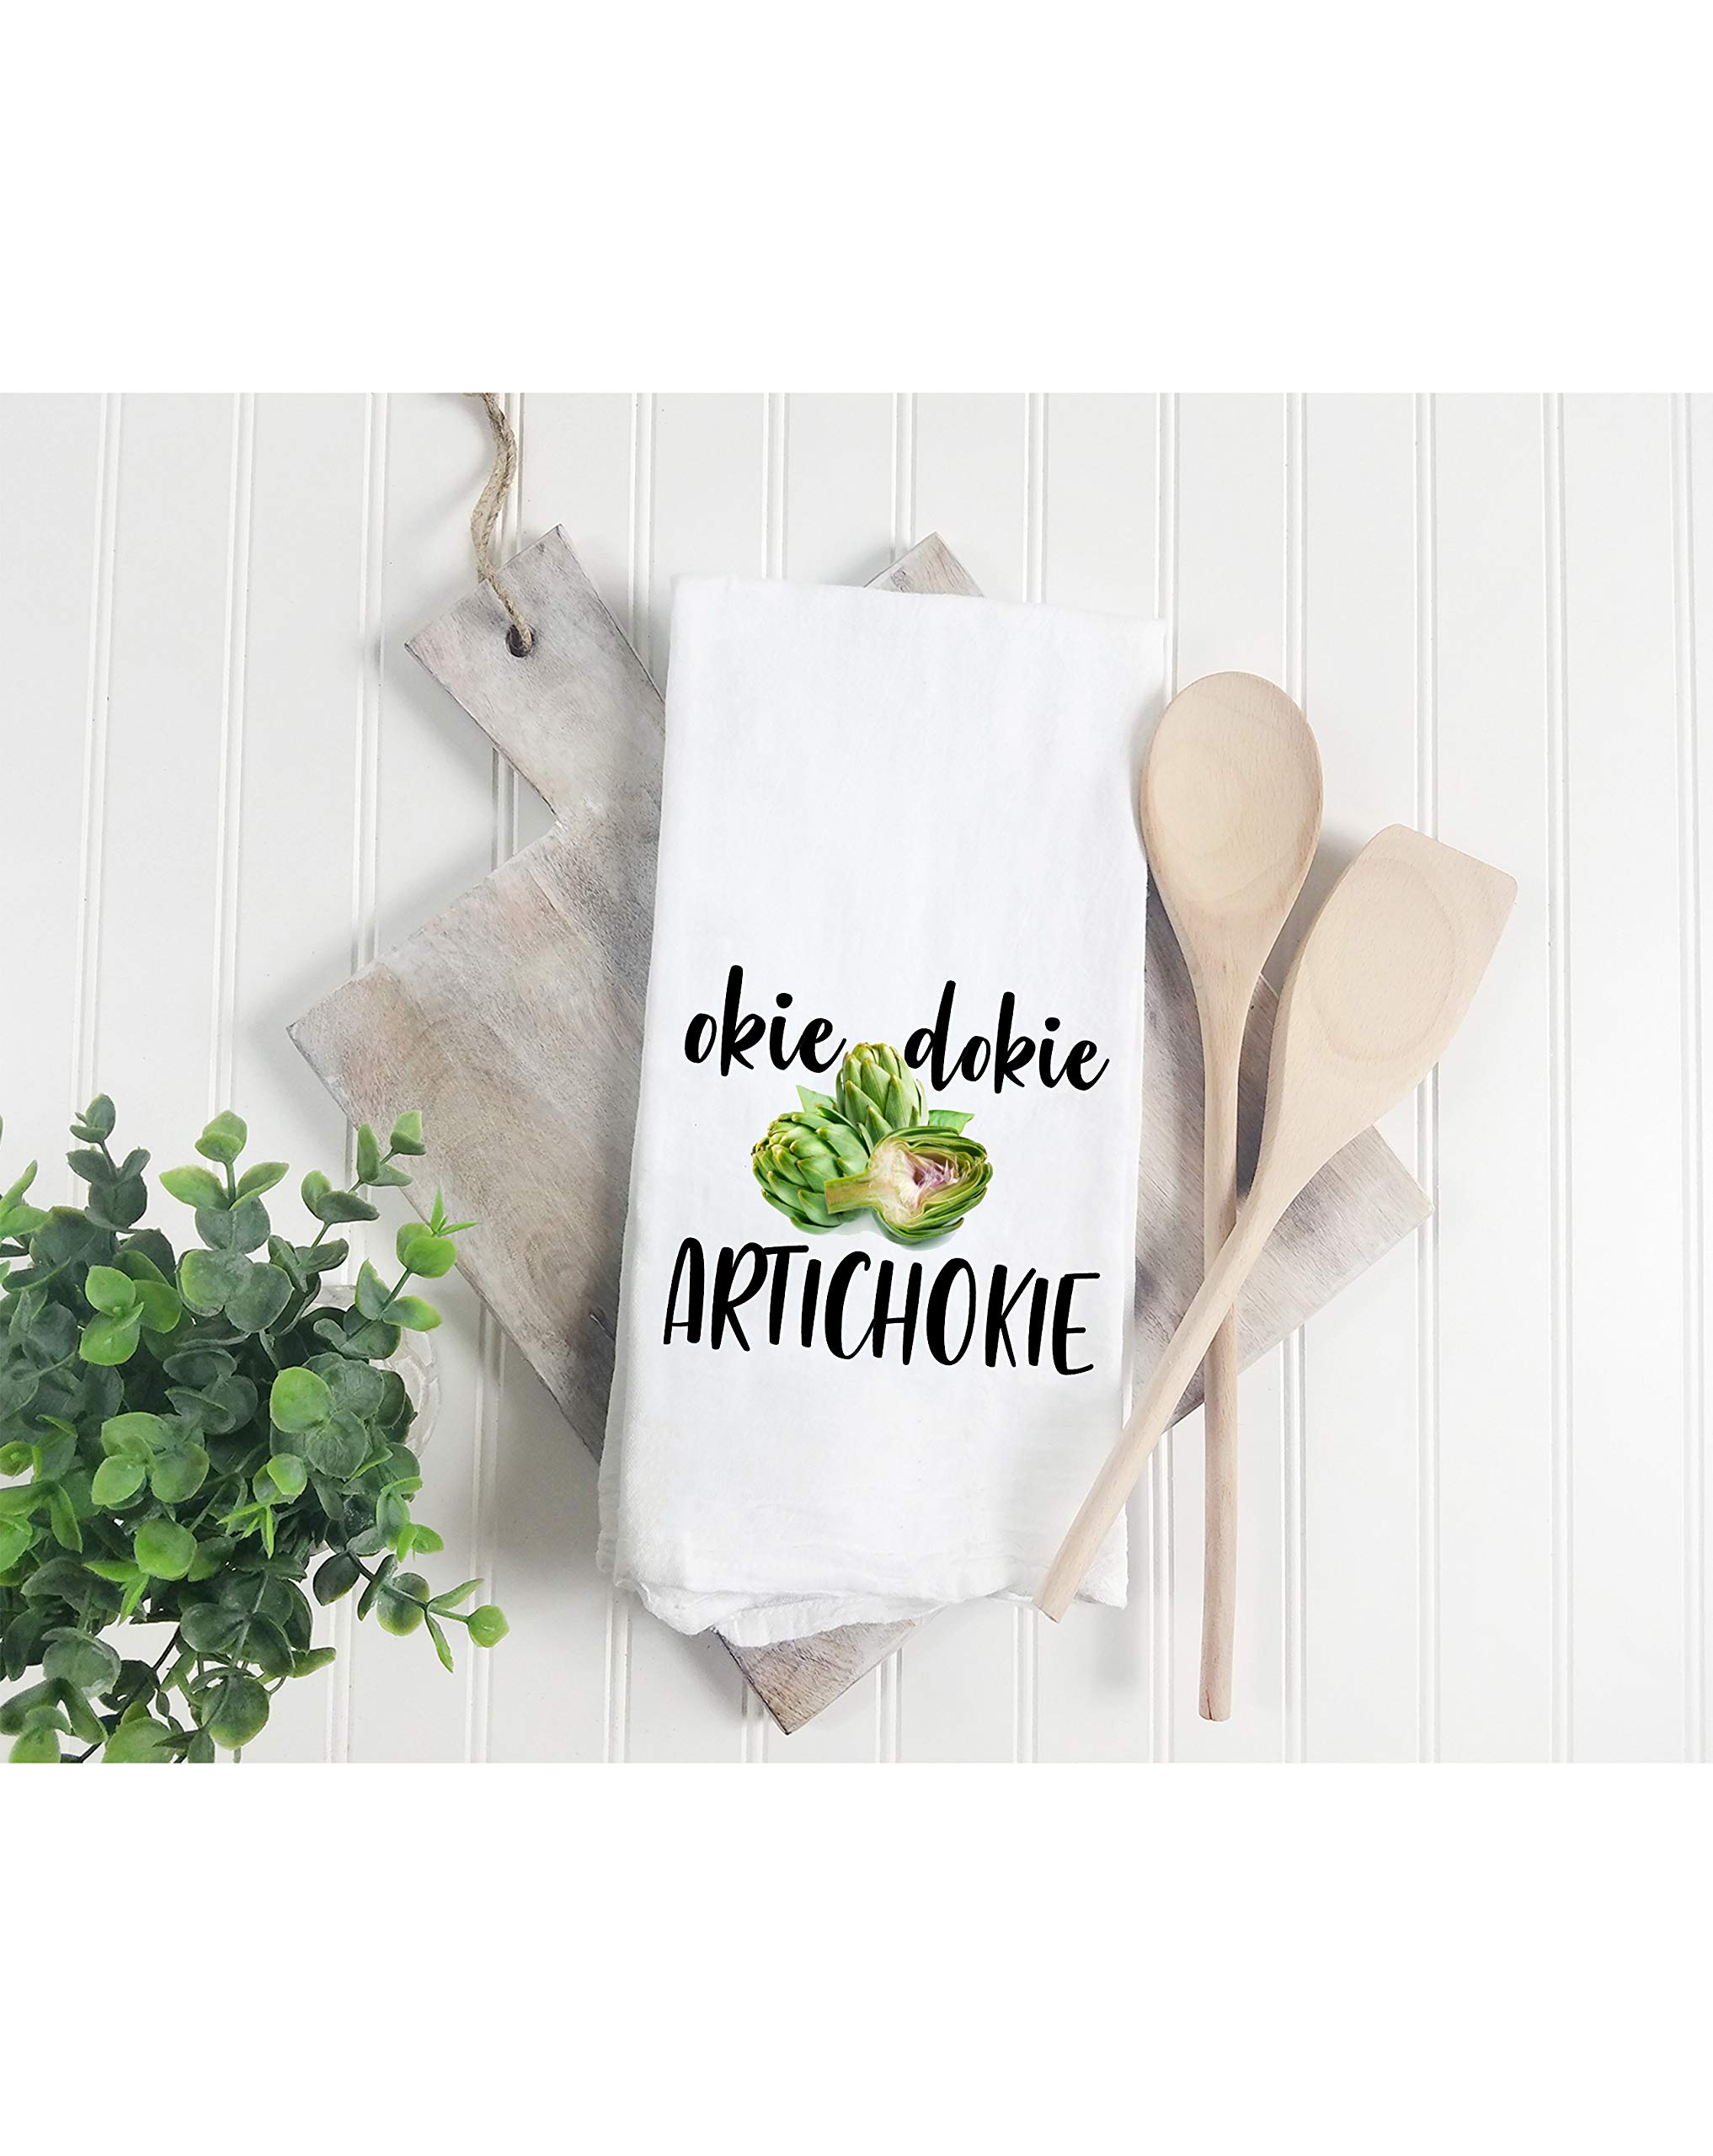 Okie dokie ARTICHOKIE - Dish Towel Kitchen Tea Towel Funny Saying Humorous Flour Sack Towels Great Housewarming Gift 28 inch by 28 inch, 100% Cotton, Multi-Purpose Towel